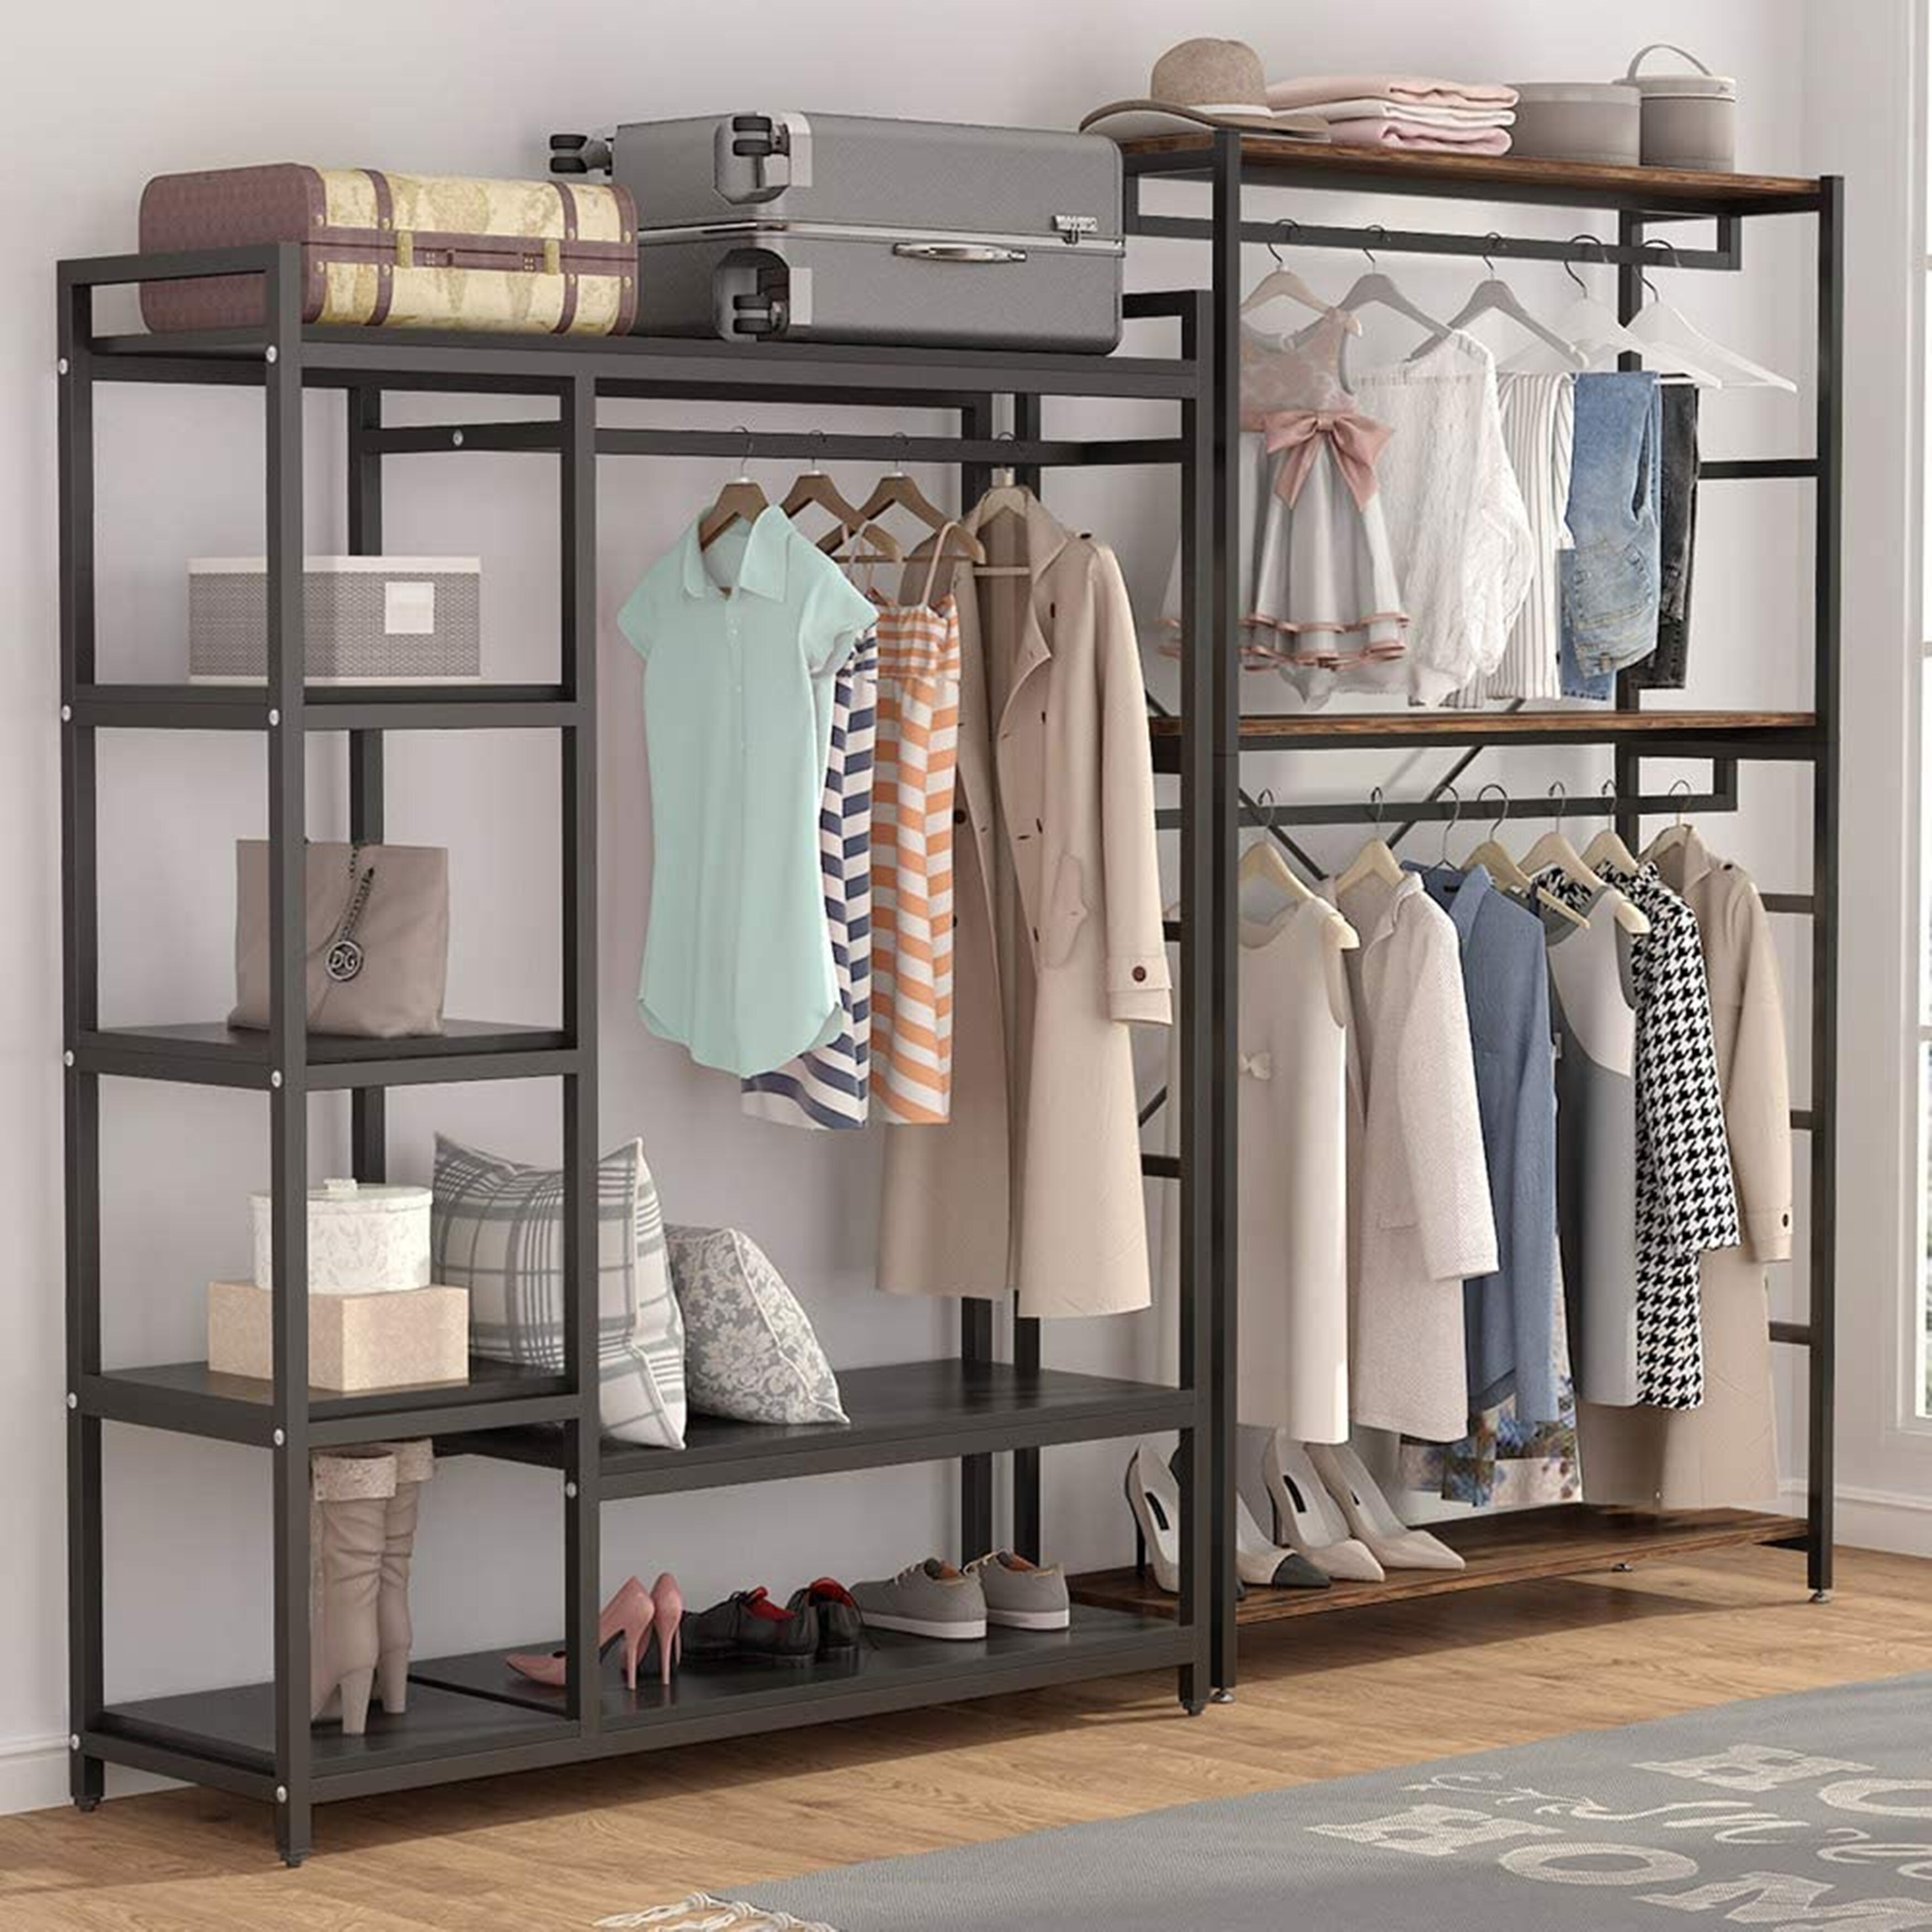 https://ak1.ostkcdn.com/images/products/is/images/direct/69e1baa88bf60fdb4c2019eade3959fec3034d85/Free--Standing-Closet-Organizer-Storage-Shelves-and-Hanging-Bar.jpg